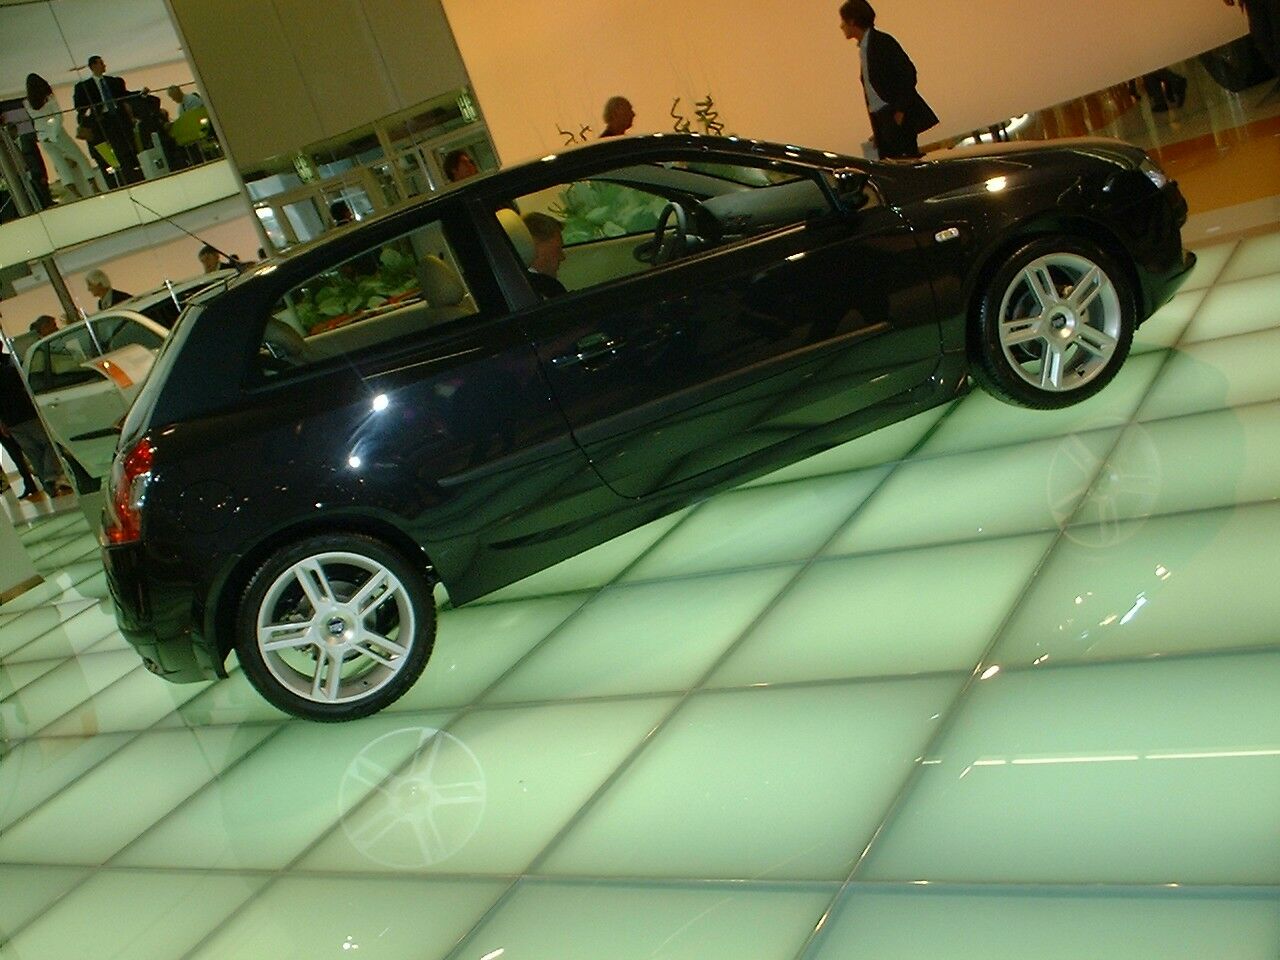 Fiat Stilo at the 2003 Frankfurt IAA